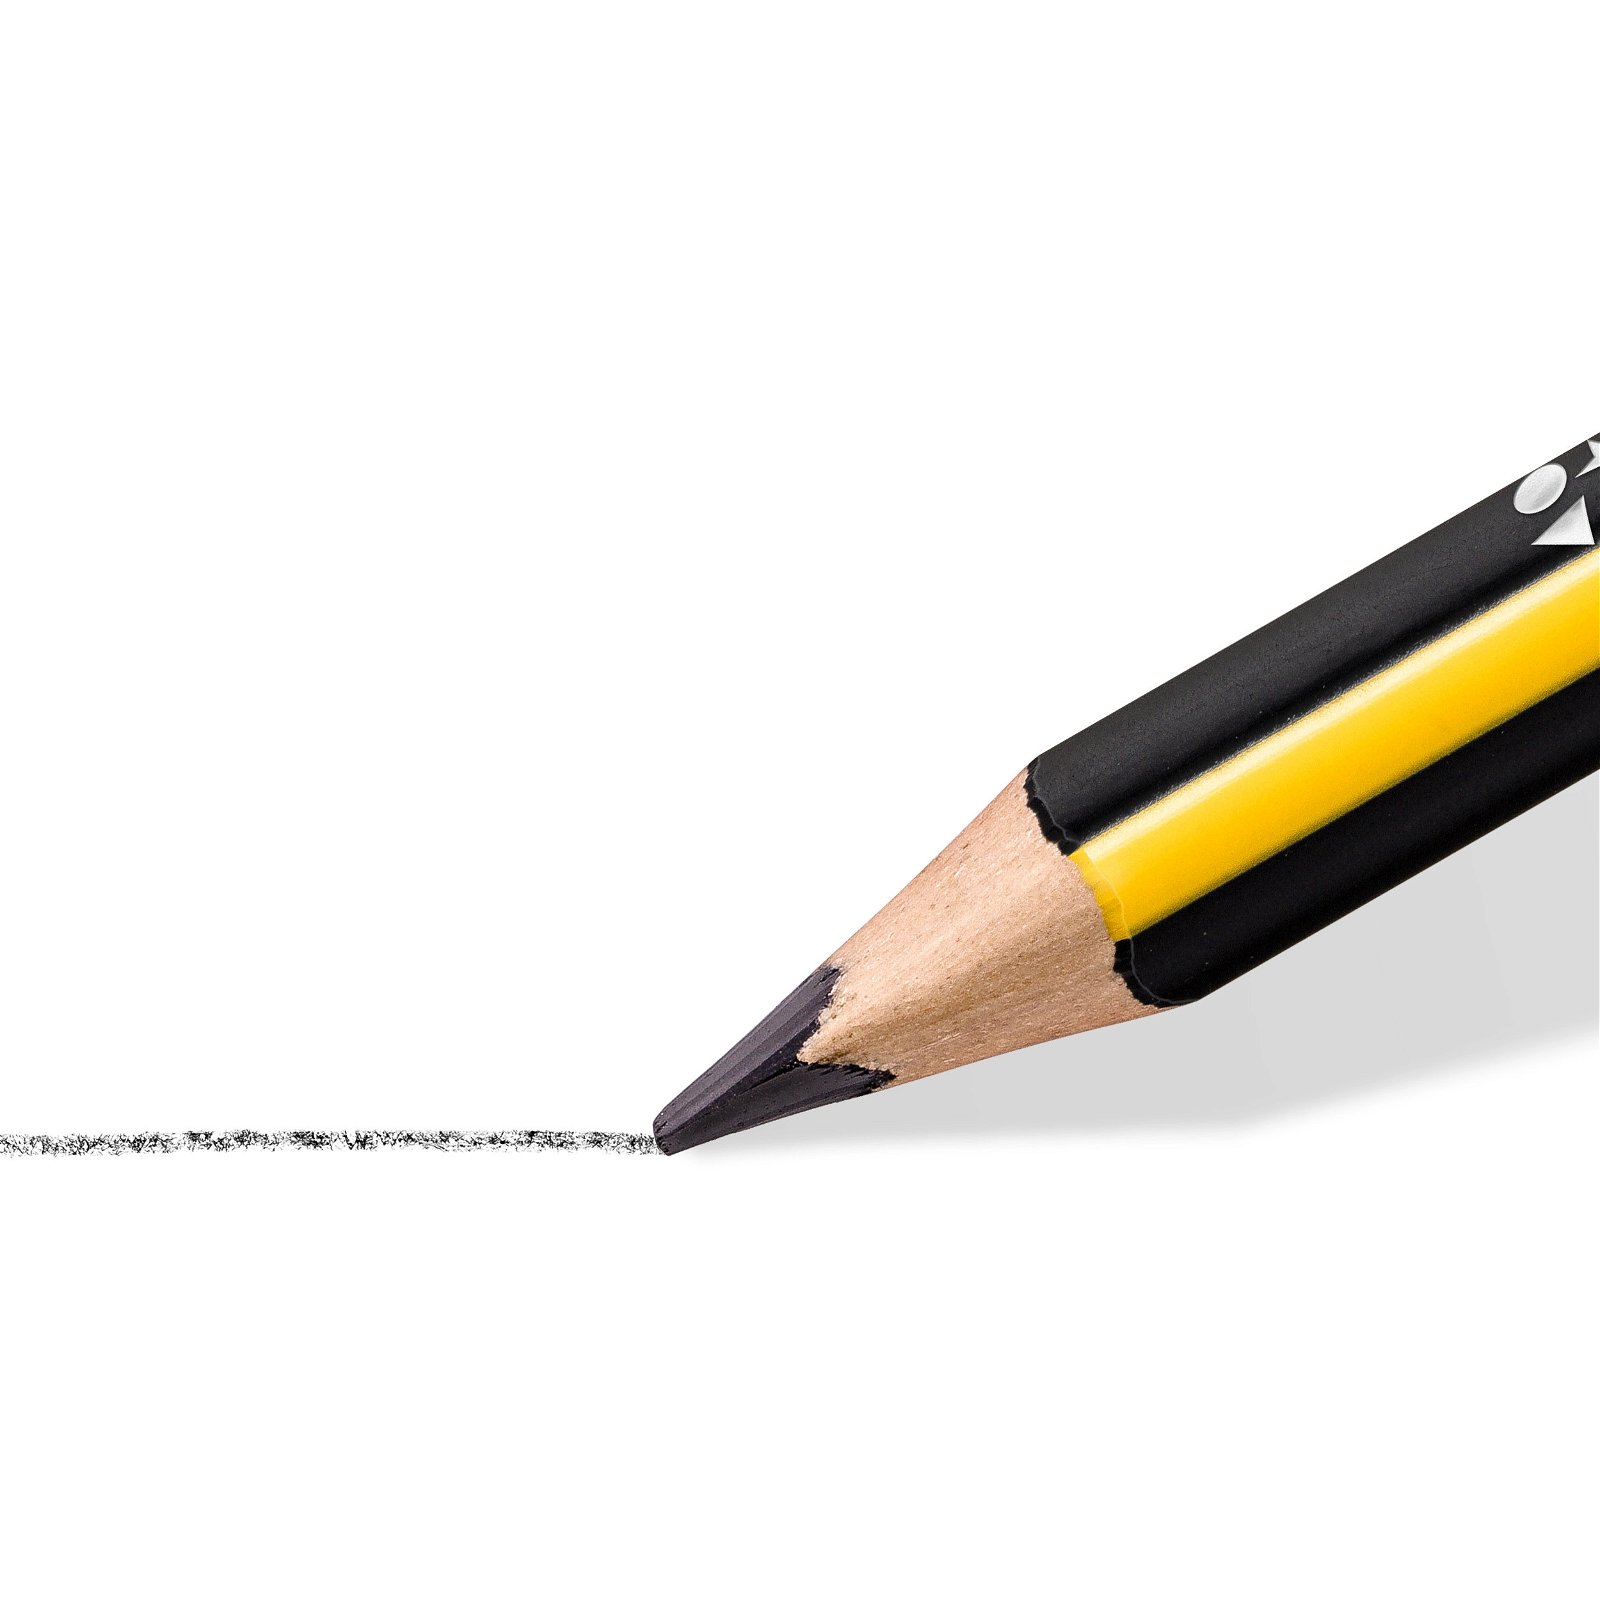 STAEDTLER Noris 119 Jumbo blyanter